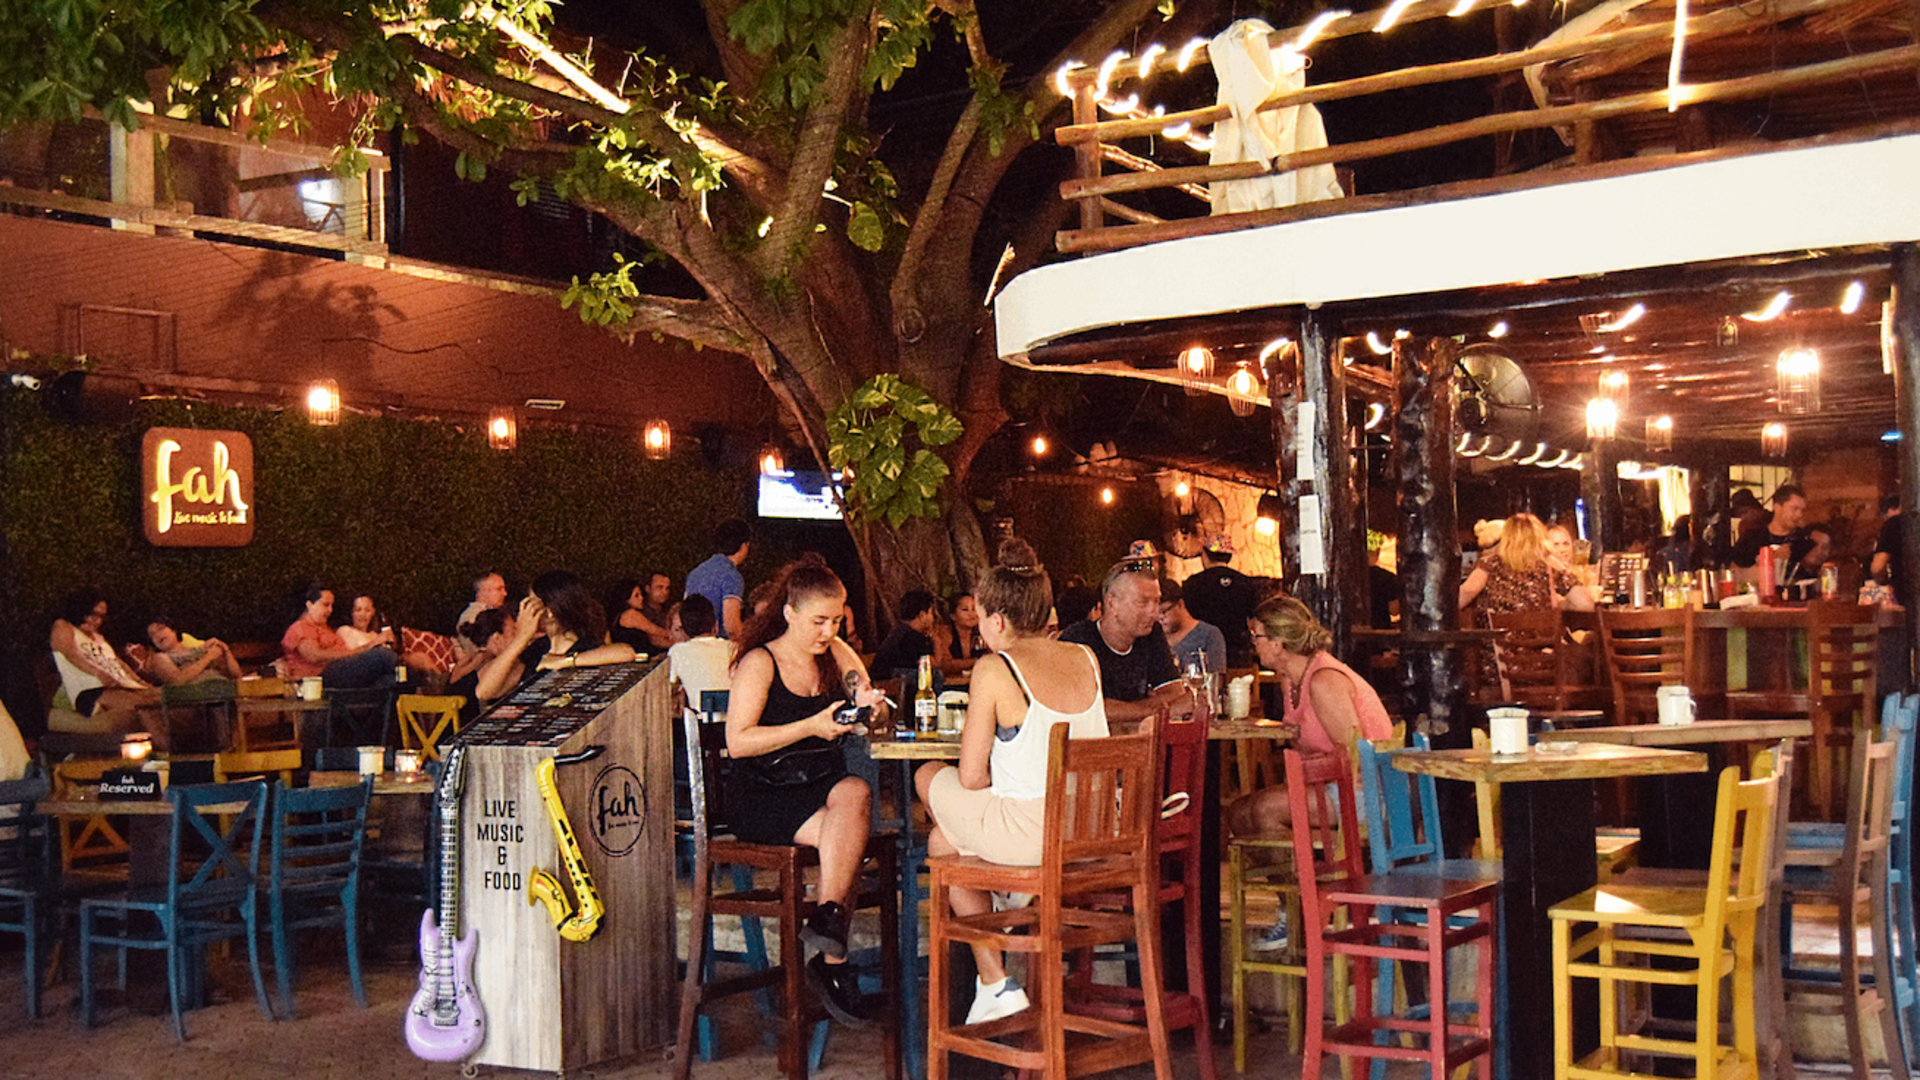 Restaurante / bar fah - Siesta Fiesta Hotel - Playa del 